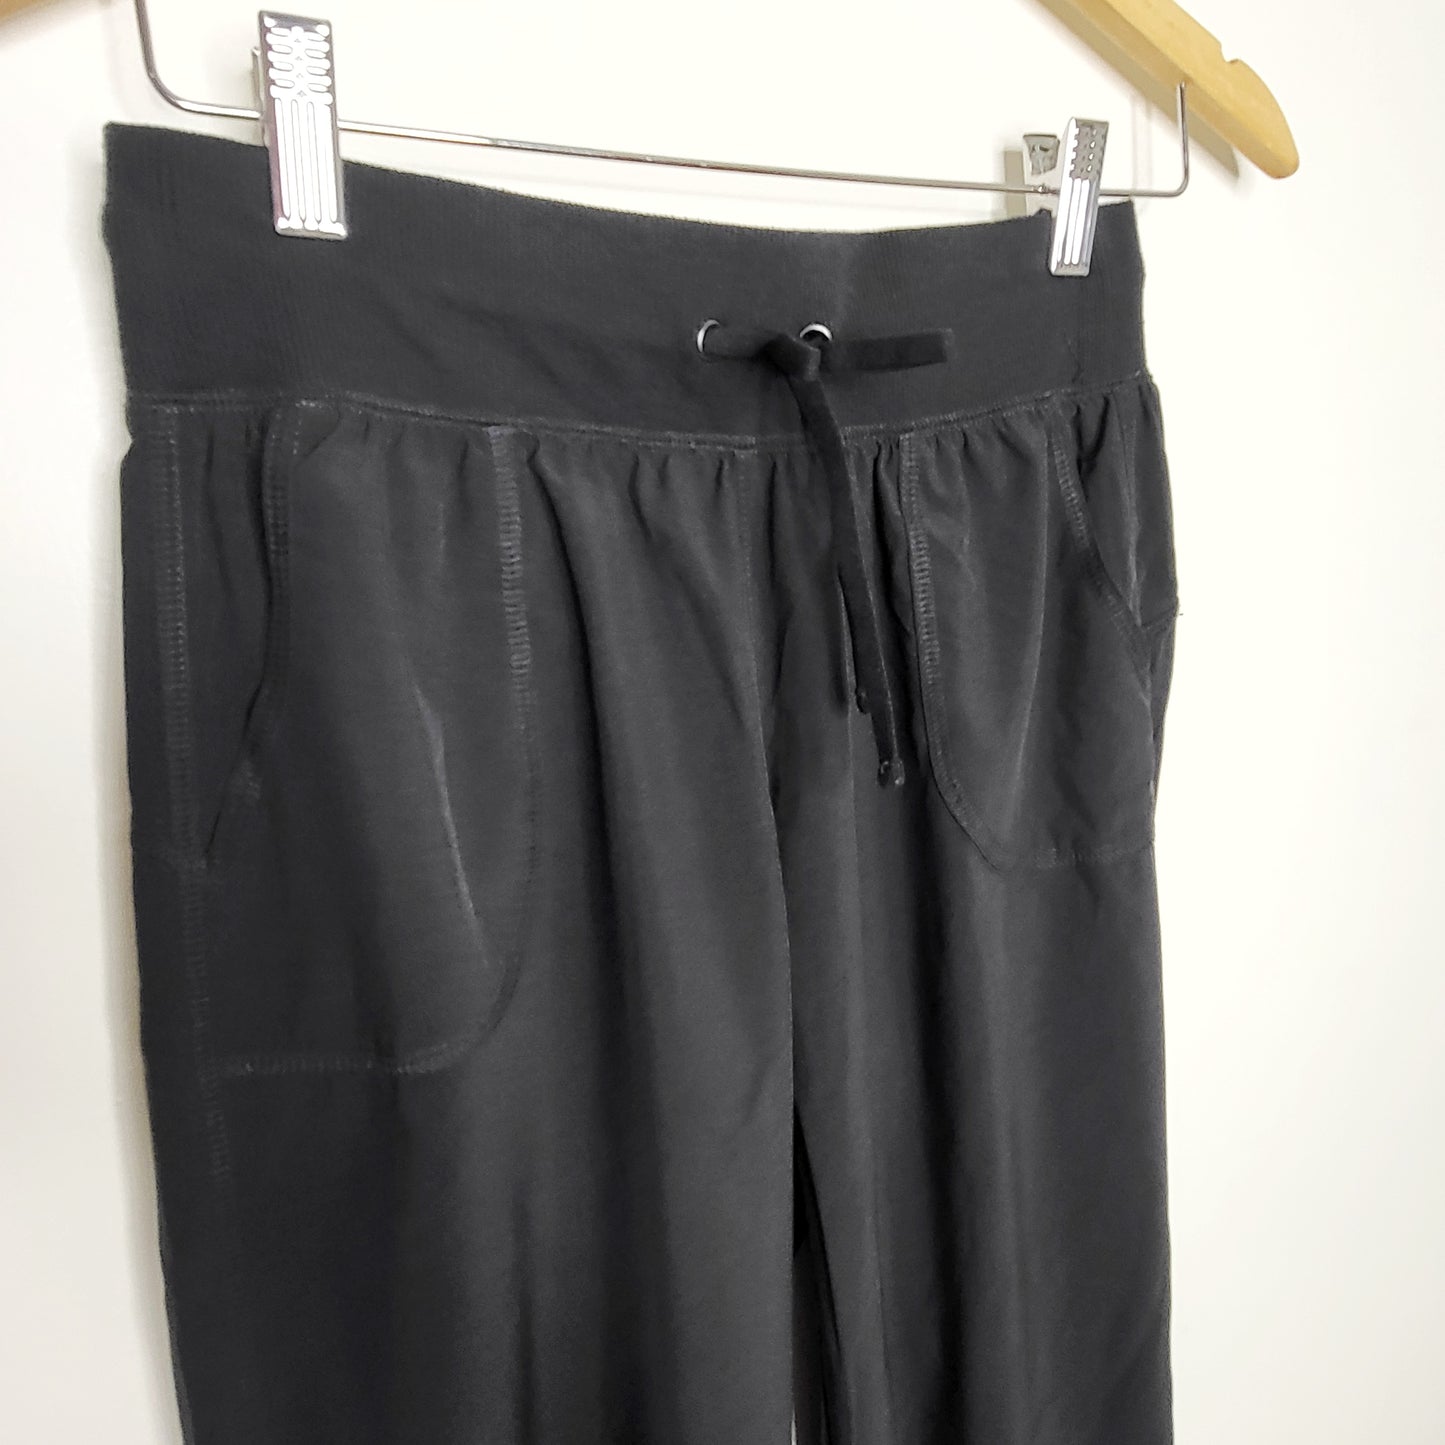 DZAV1 - Old Navy black wide leg quick dry pants, size XS, good condition